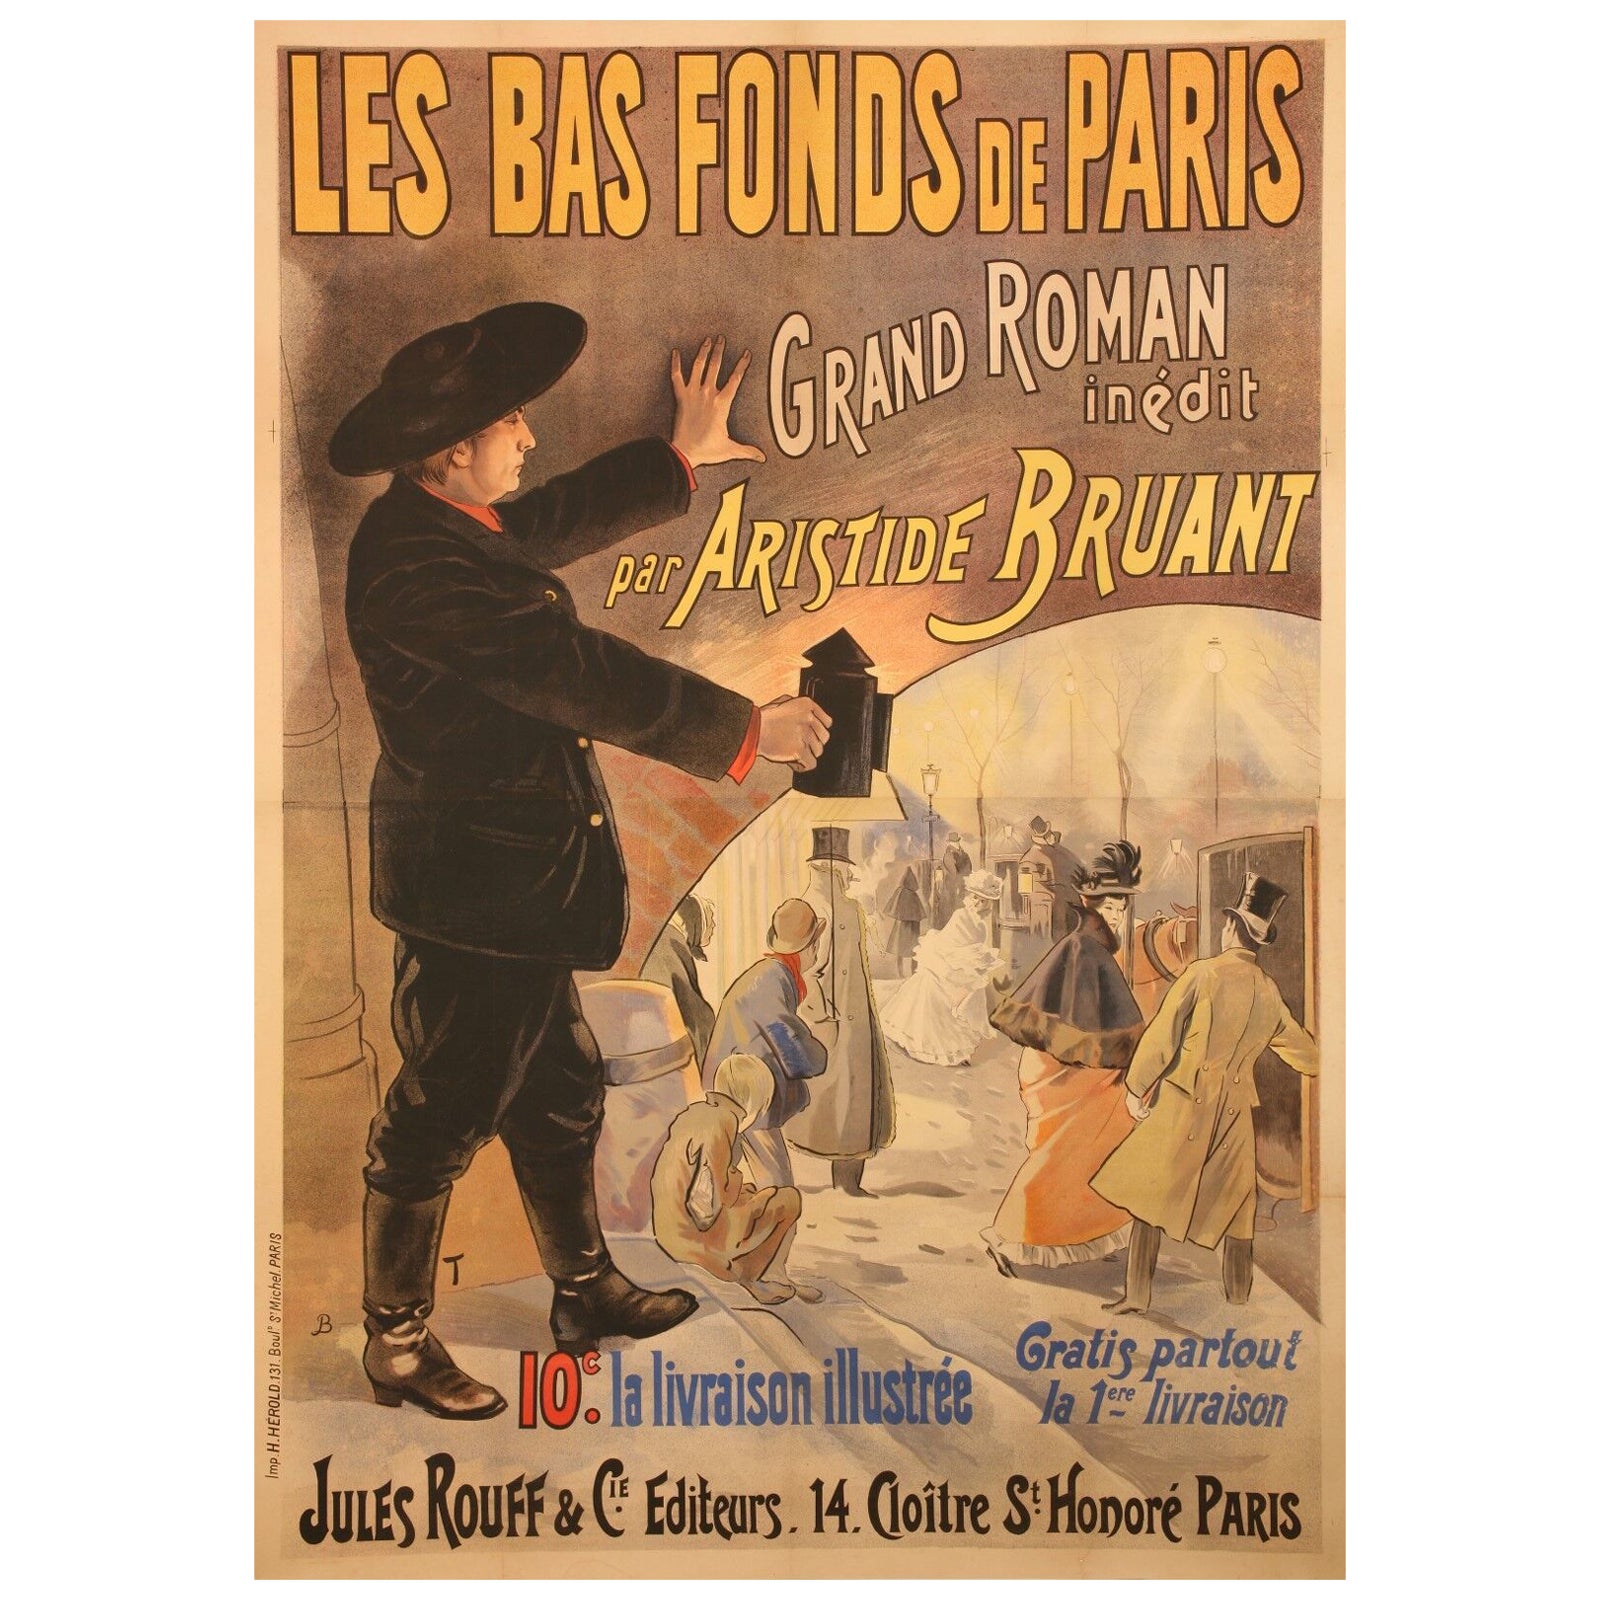 Original Vintage Poster-Bas funds of Paris-Aristide Bruant-Lautrec, 1895